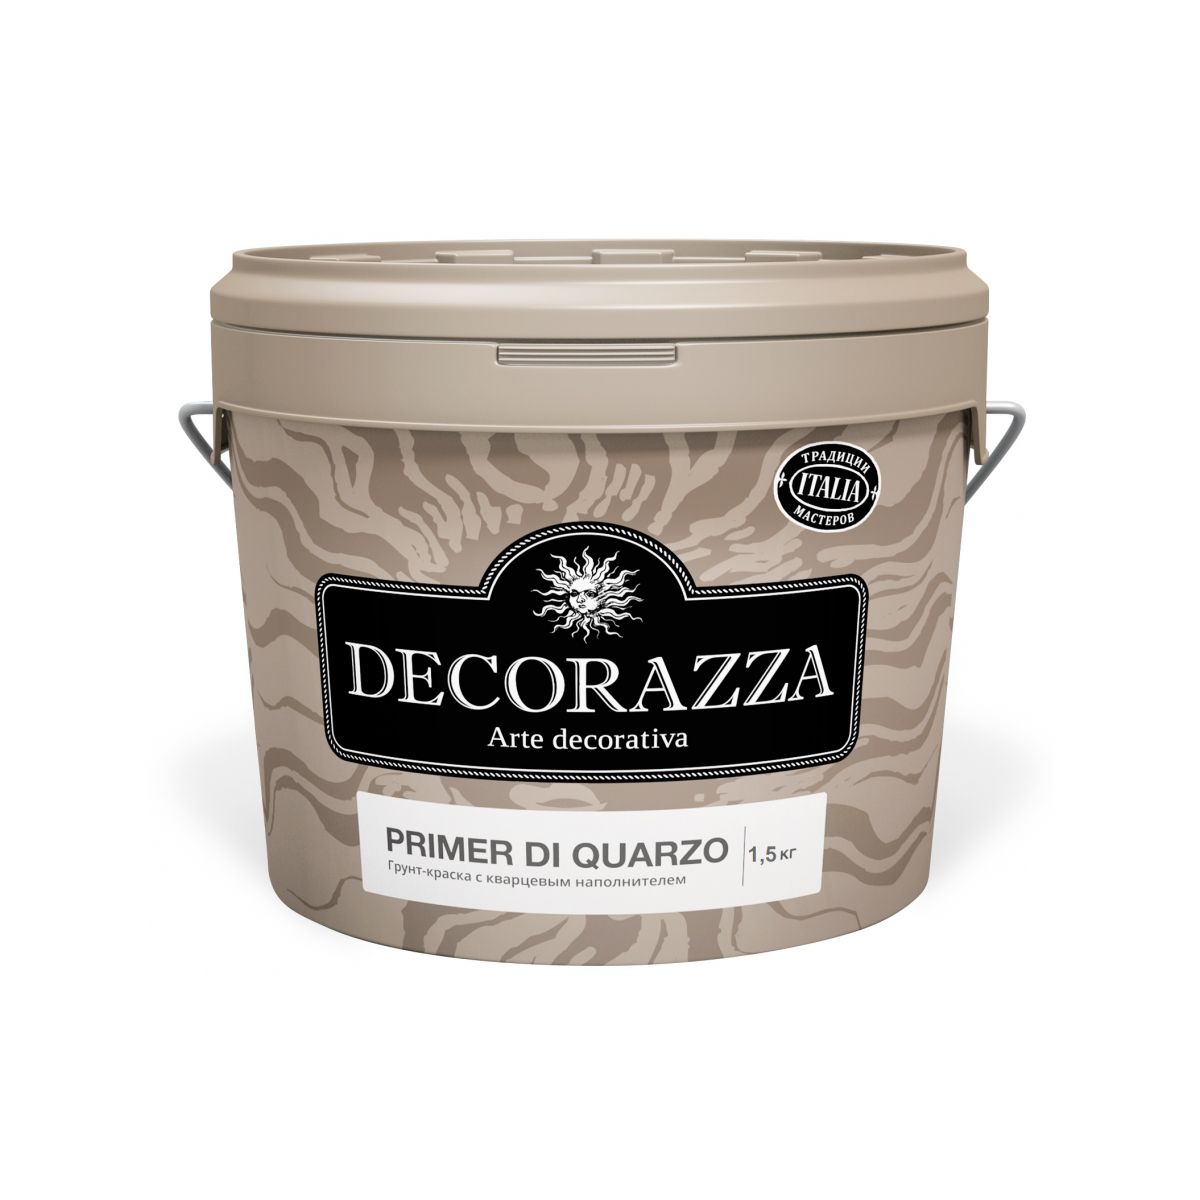 Грунт-краска Decorazza Primer di Quarzo, 1,5 кг краска decorazza lucetezza nova lcn 001 1 л